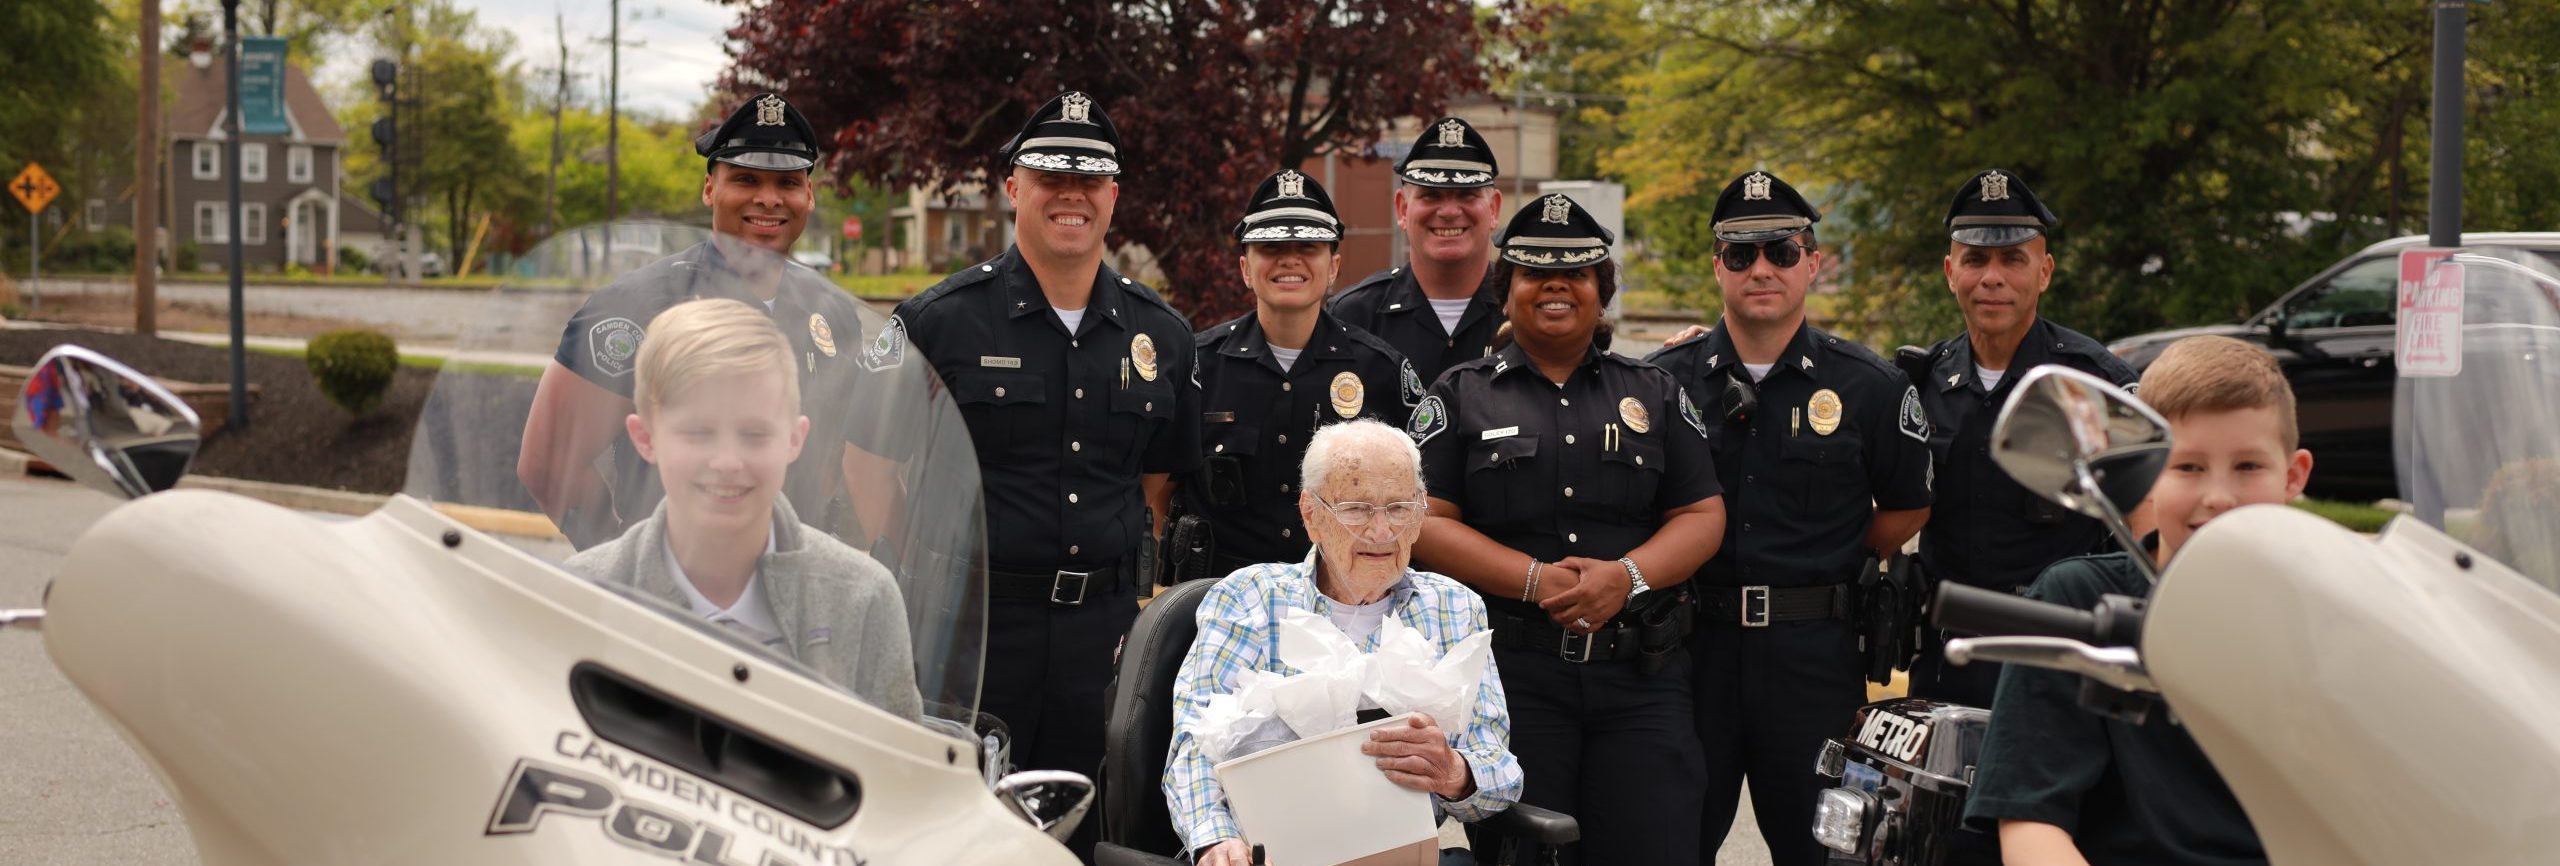 Retired policemen celebrates 100th birthday!